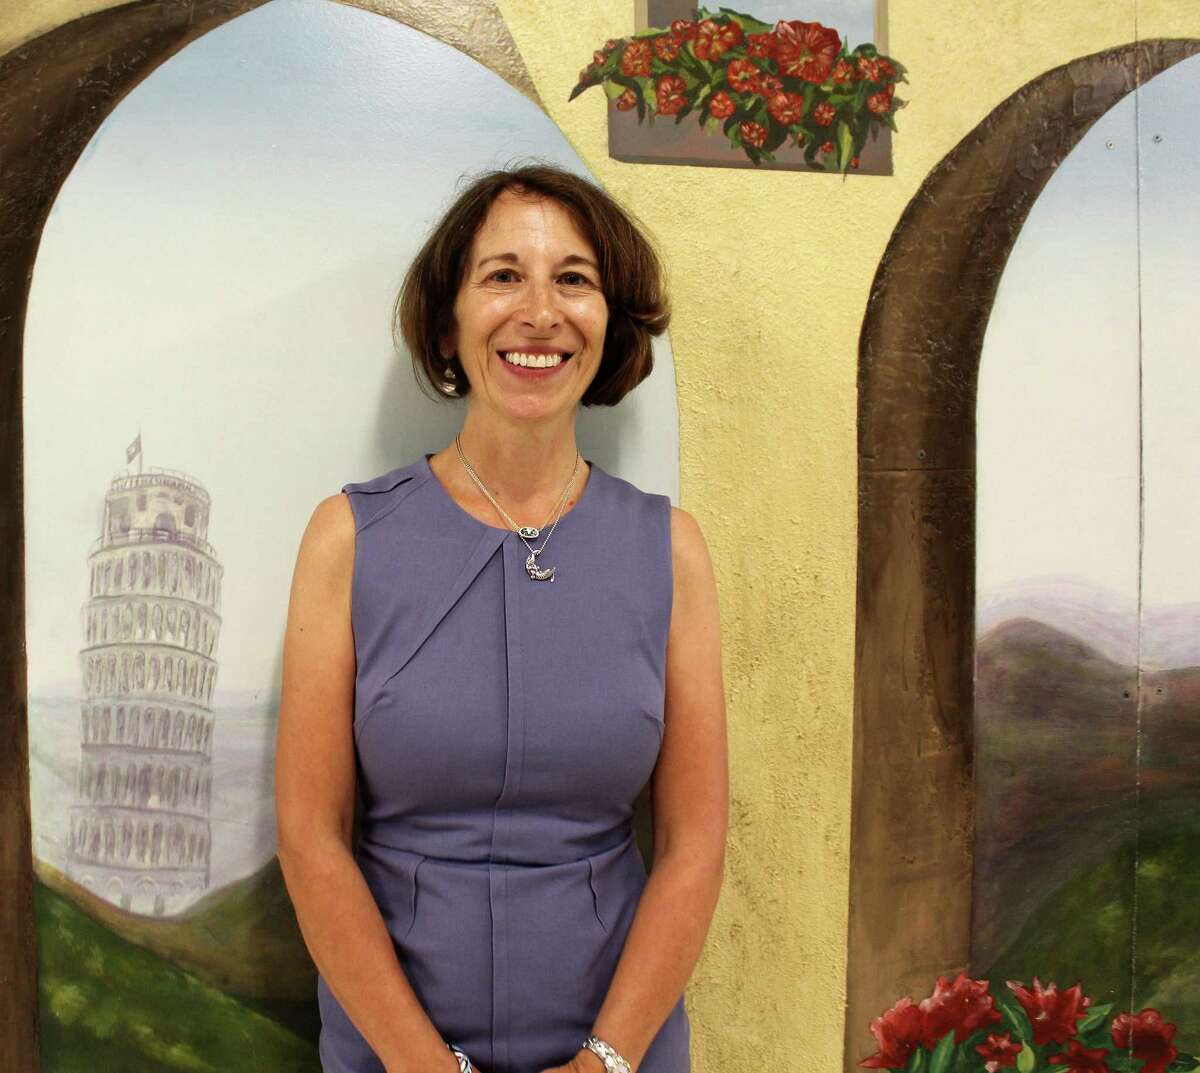 Staples High School Italian teacher Enia Noonan, in front of a mural at the high school, has been named 2018 Westport teacher of the year.